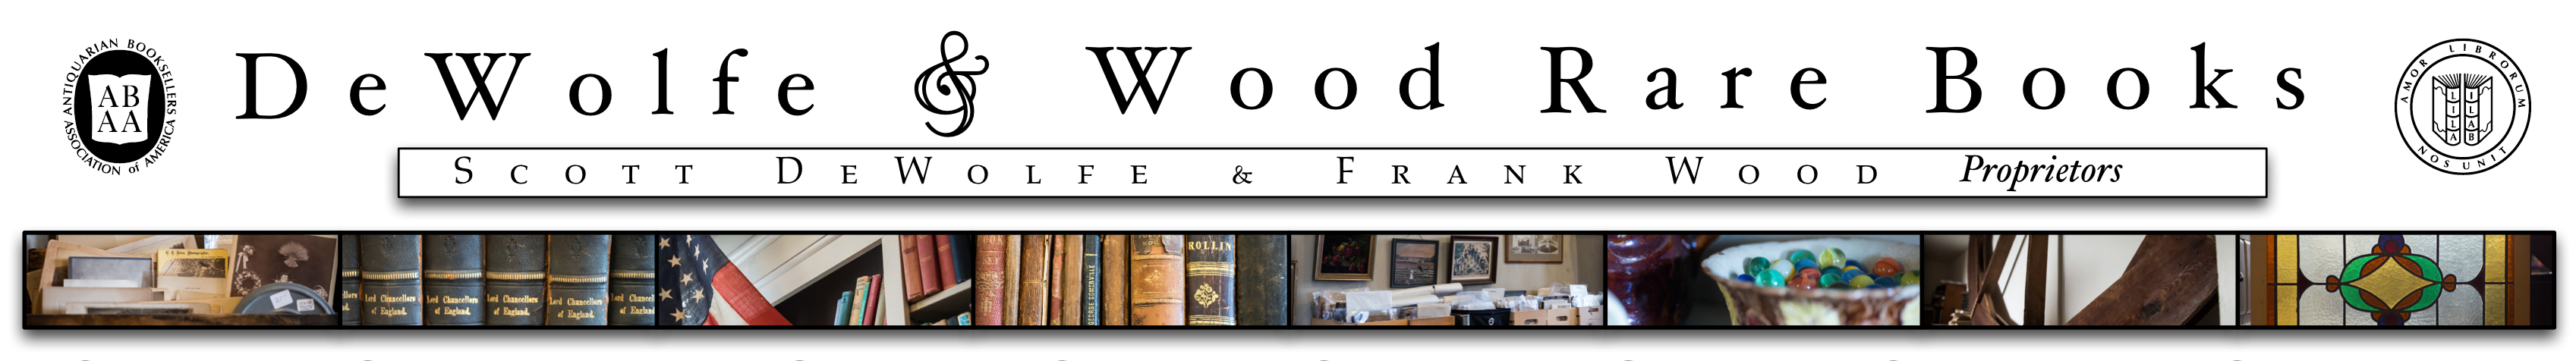 DeWolfe & Wood